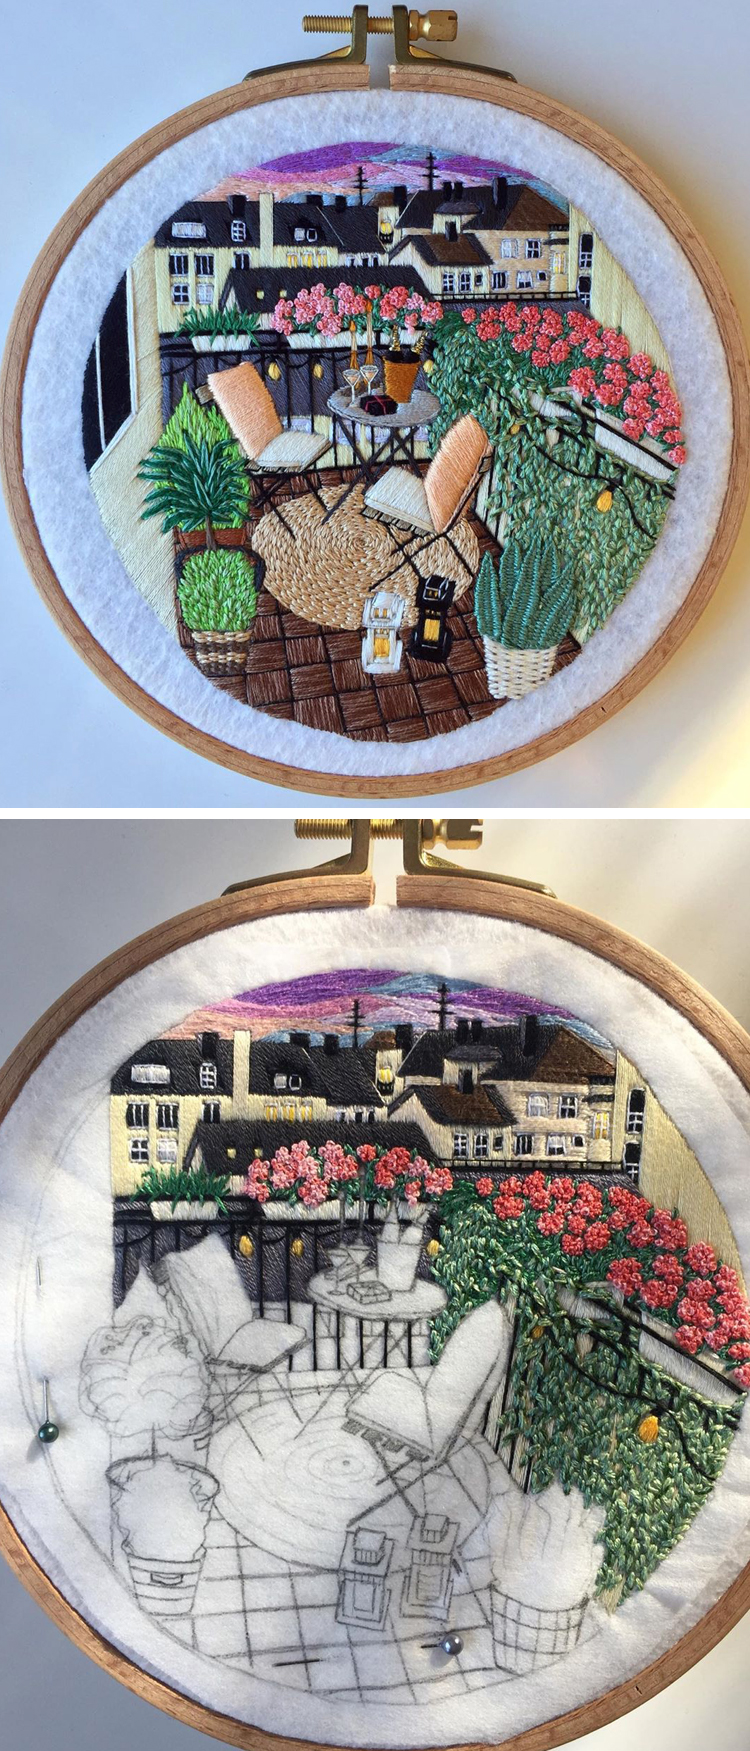 Interior embroidery by Fatma Karaca